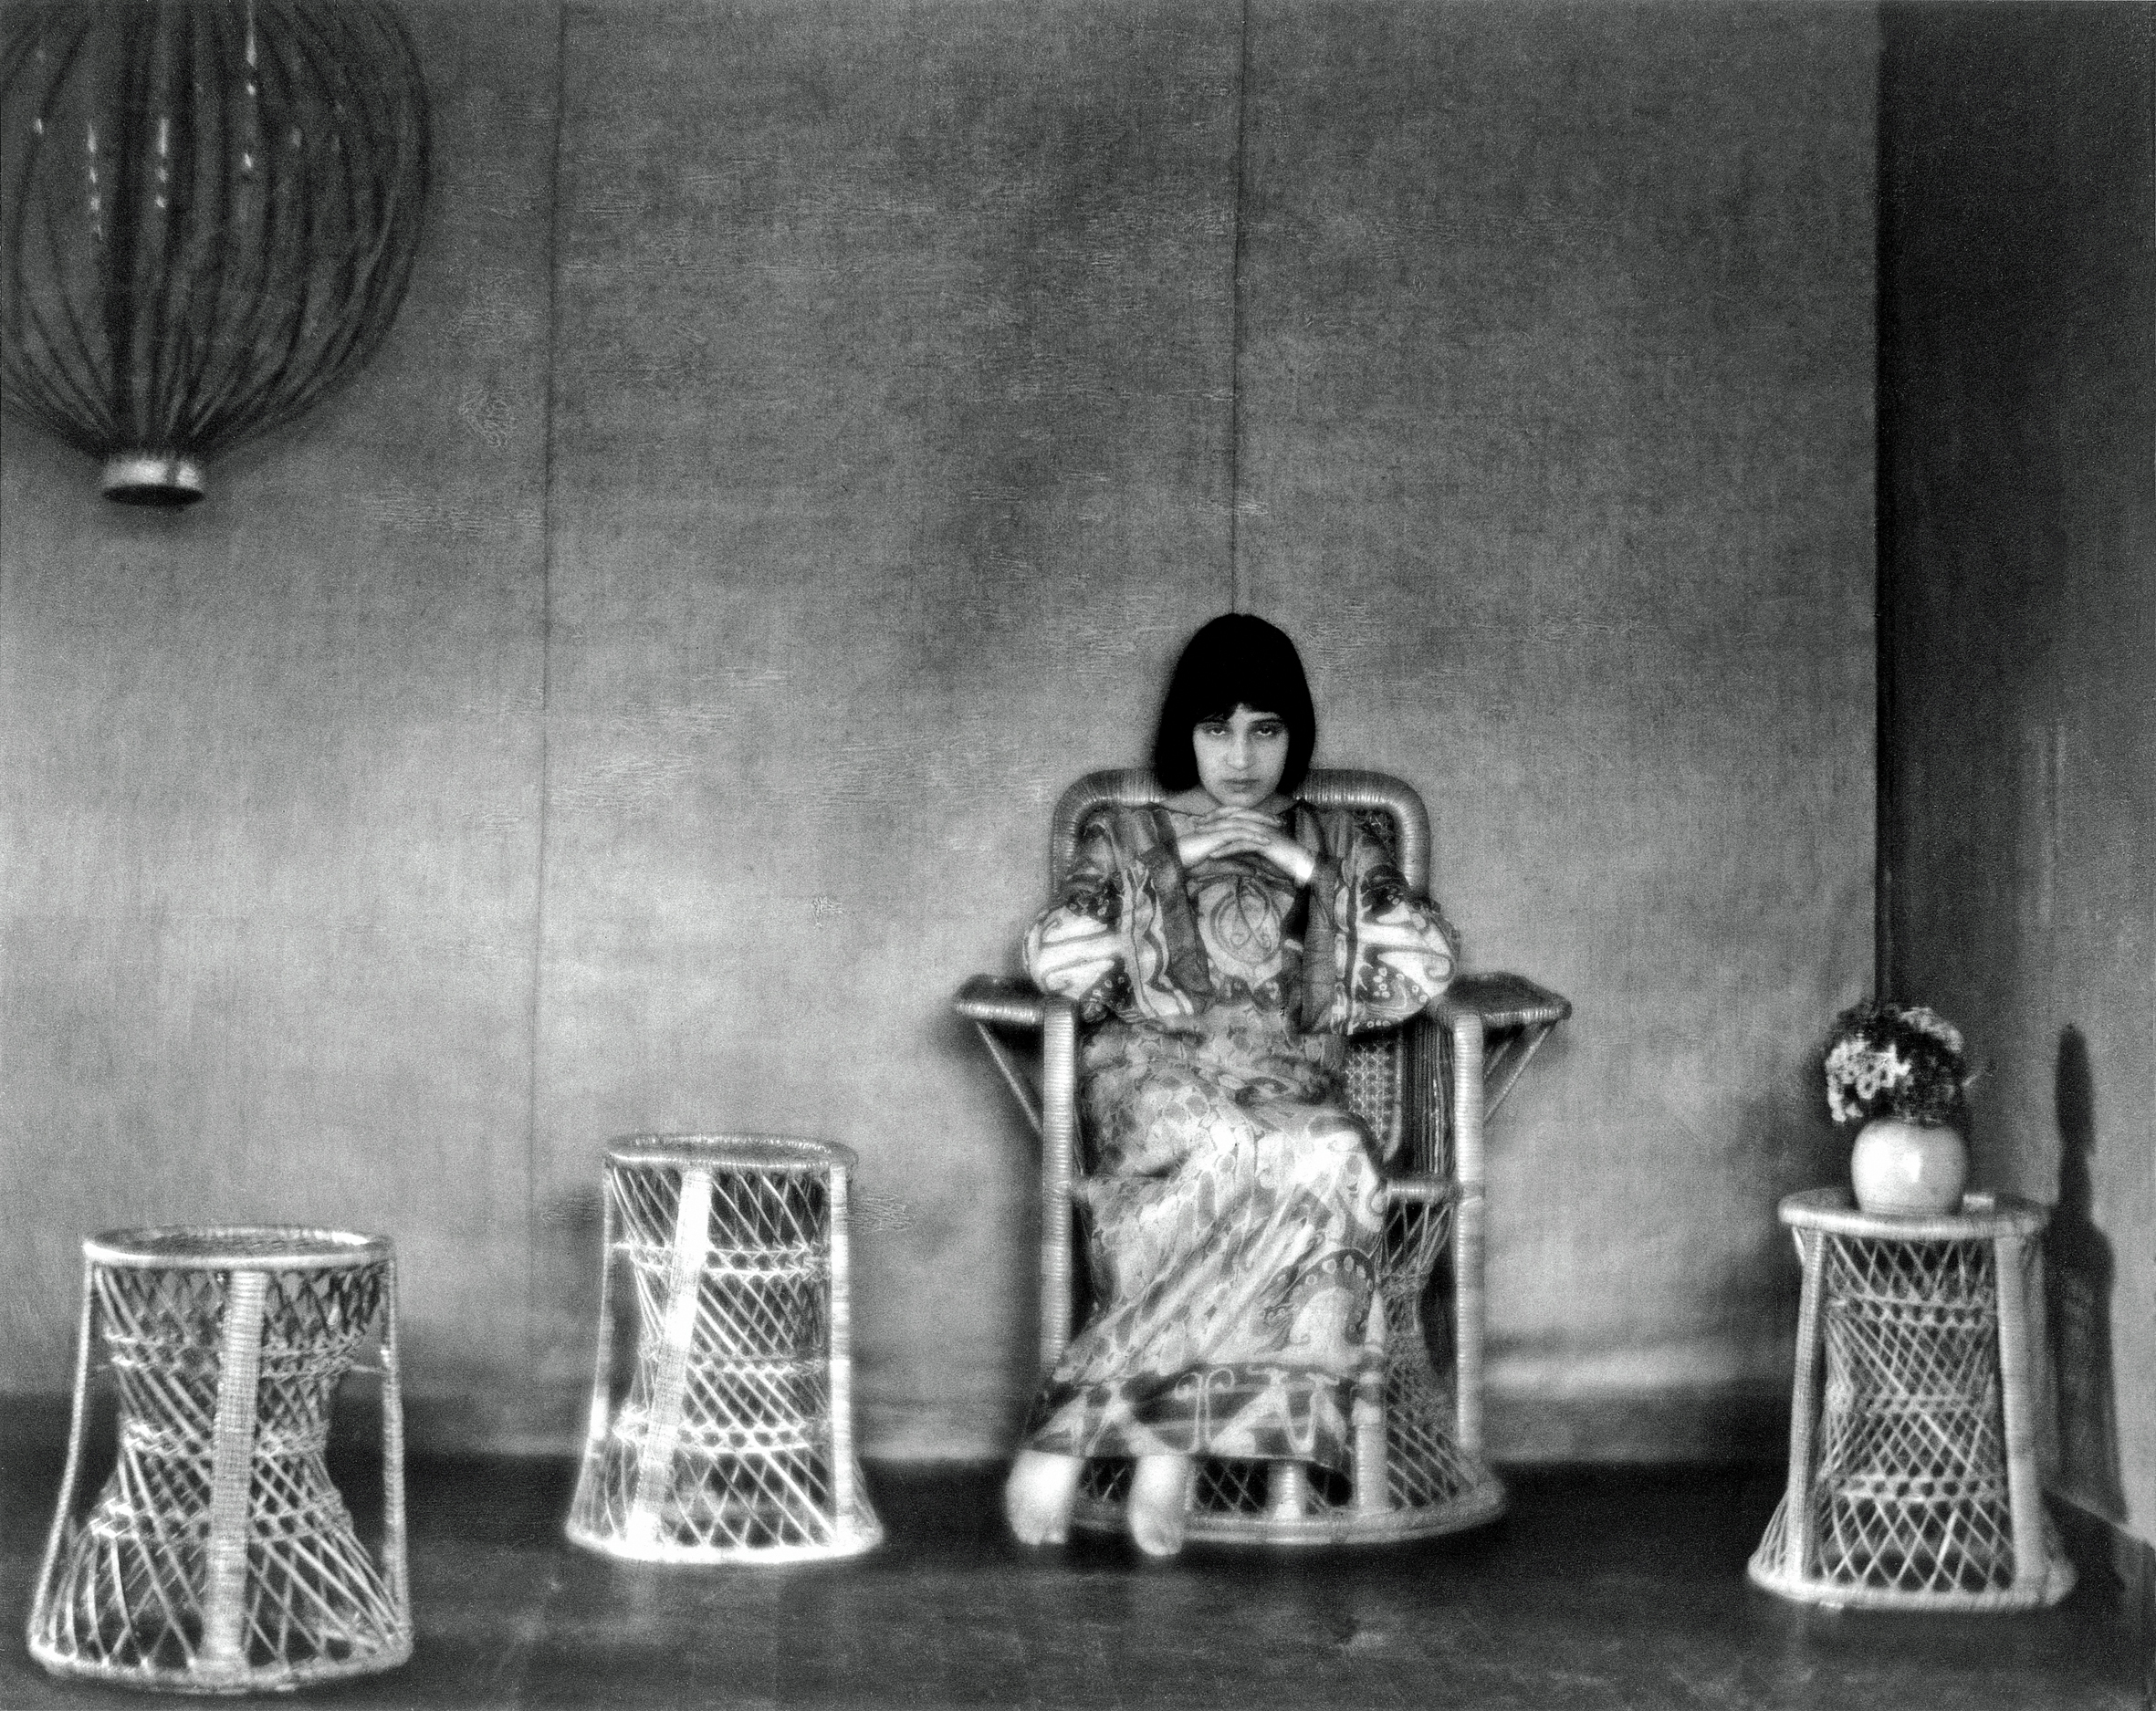 La artista italiana Tina Modotti en el taller fotográfico de Edward Weston.